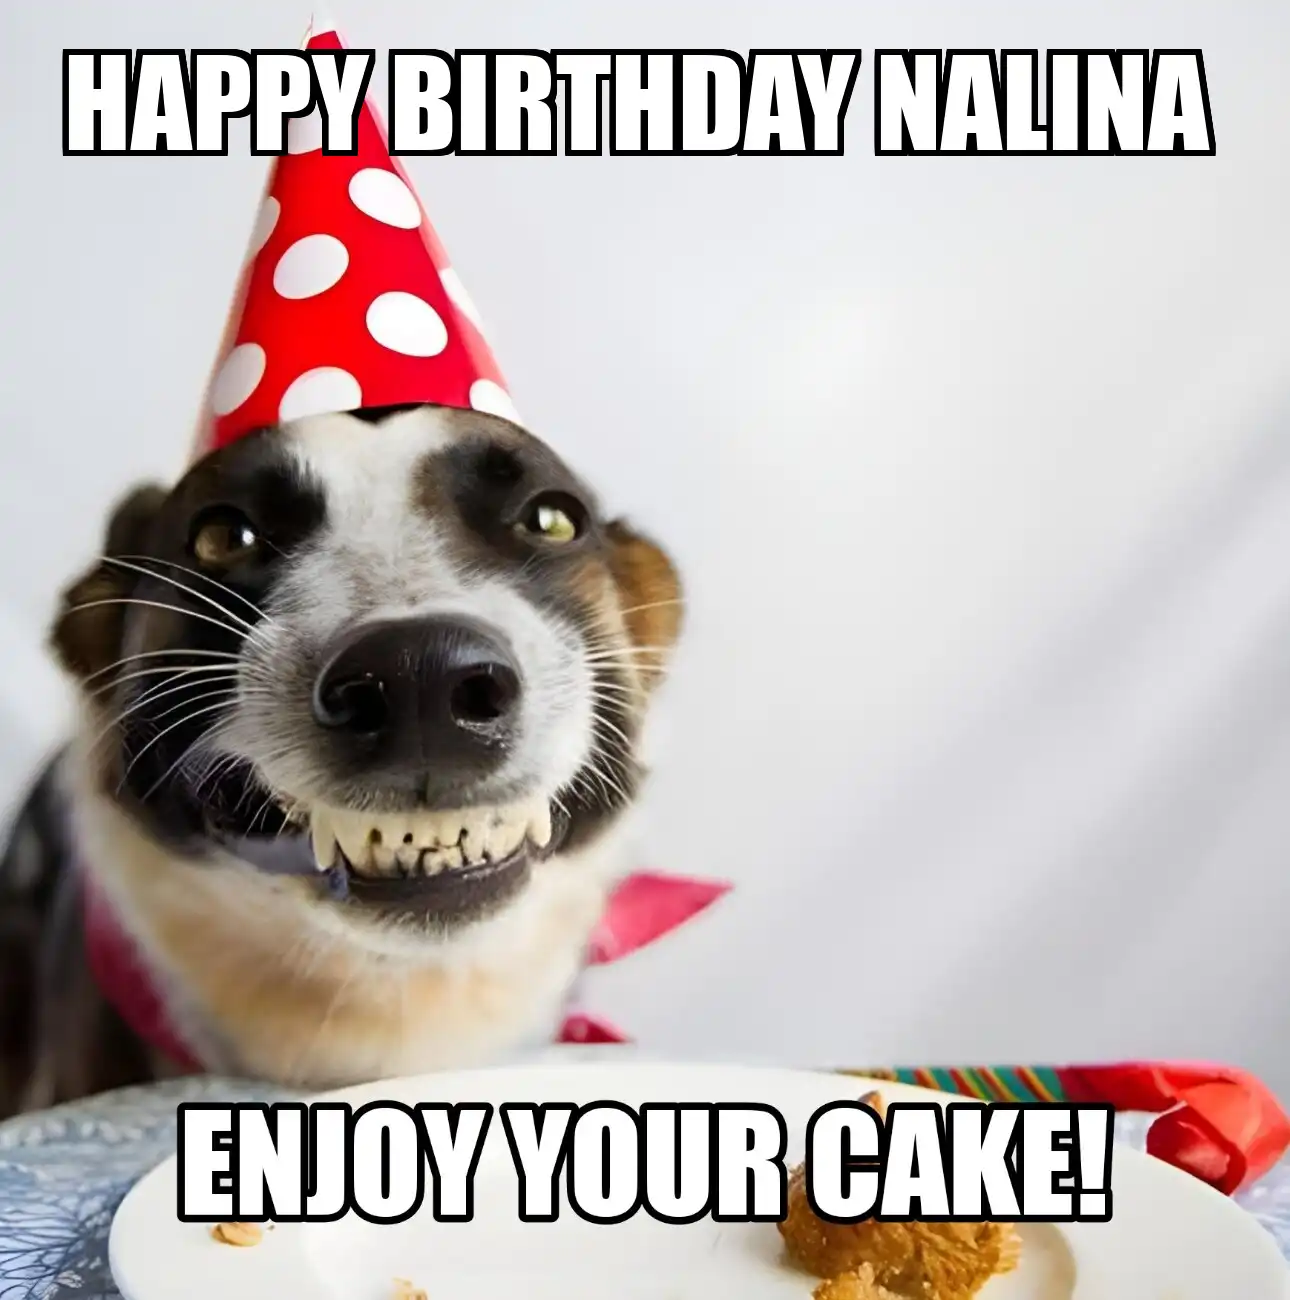 Happy Birthday Nalina Enjoy Your Cake Dog Meme